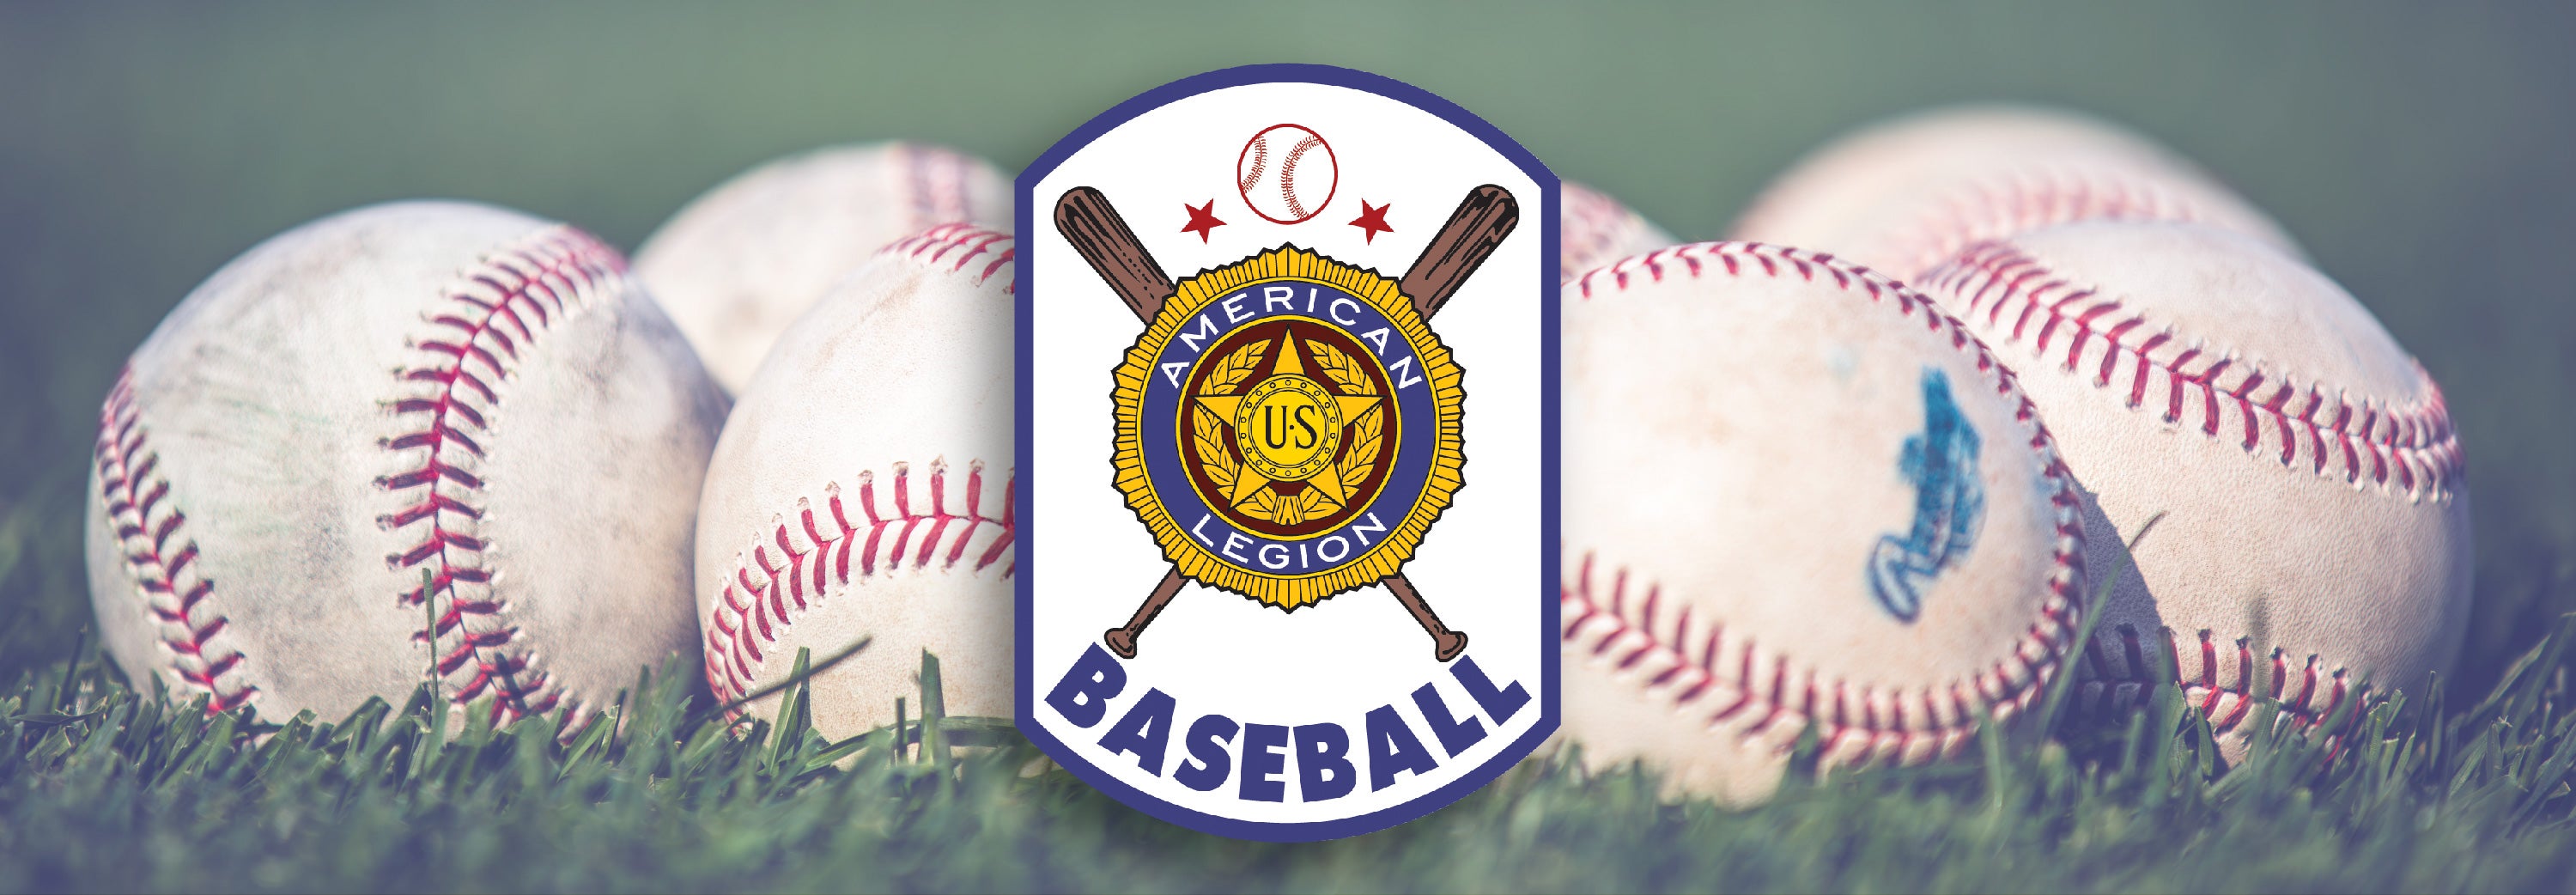 4th District American Legion Baseball